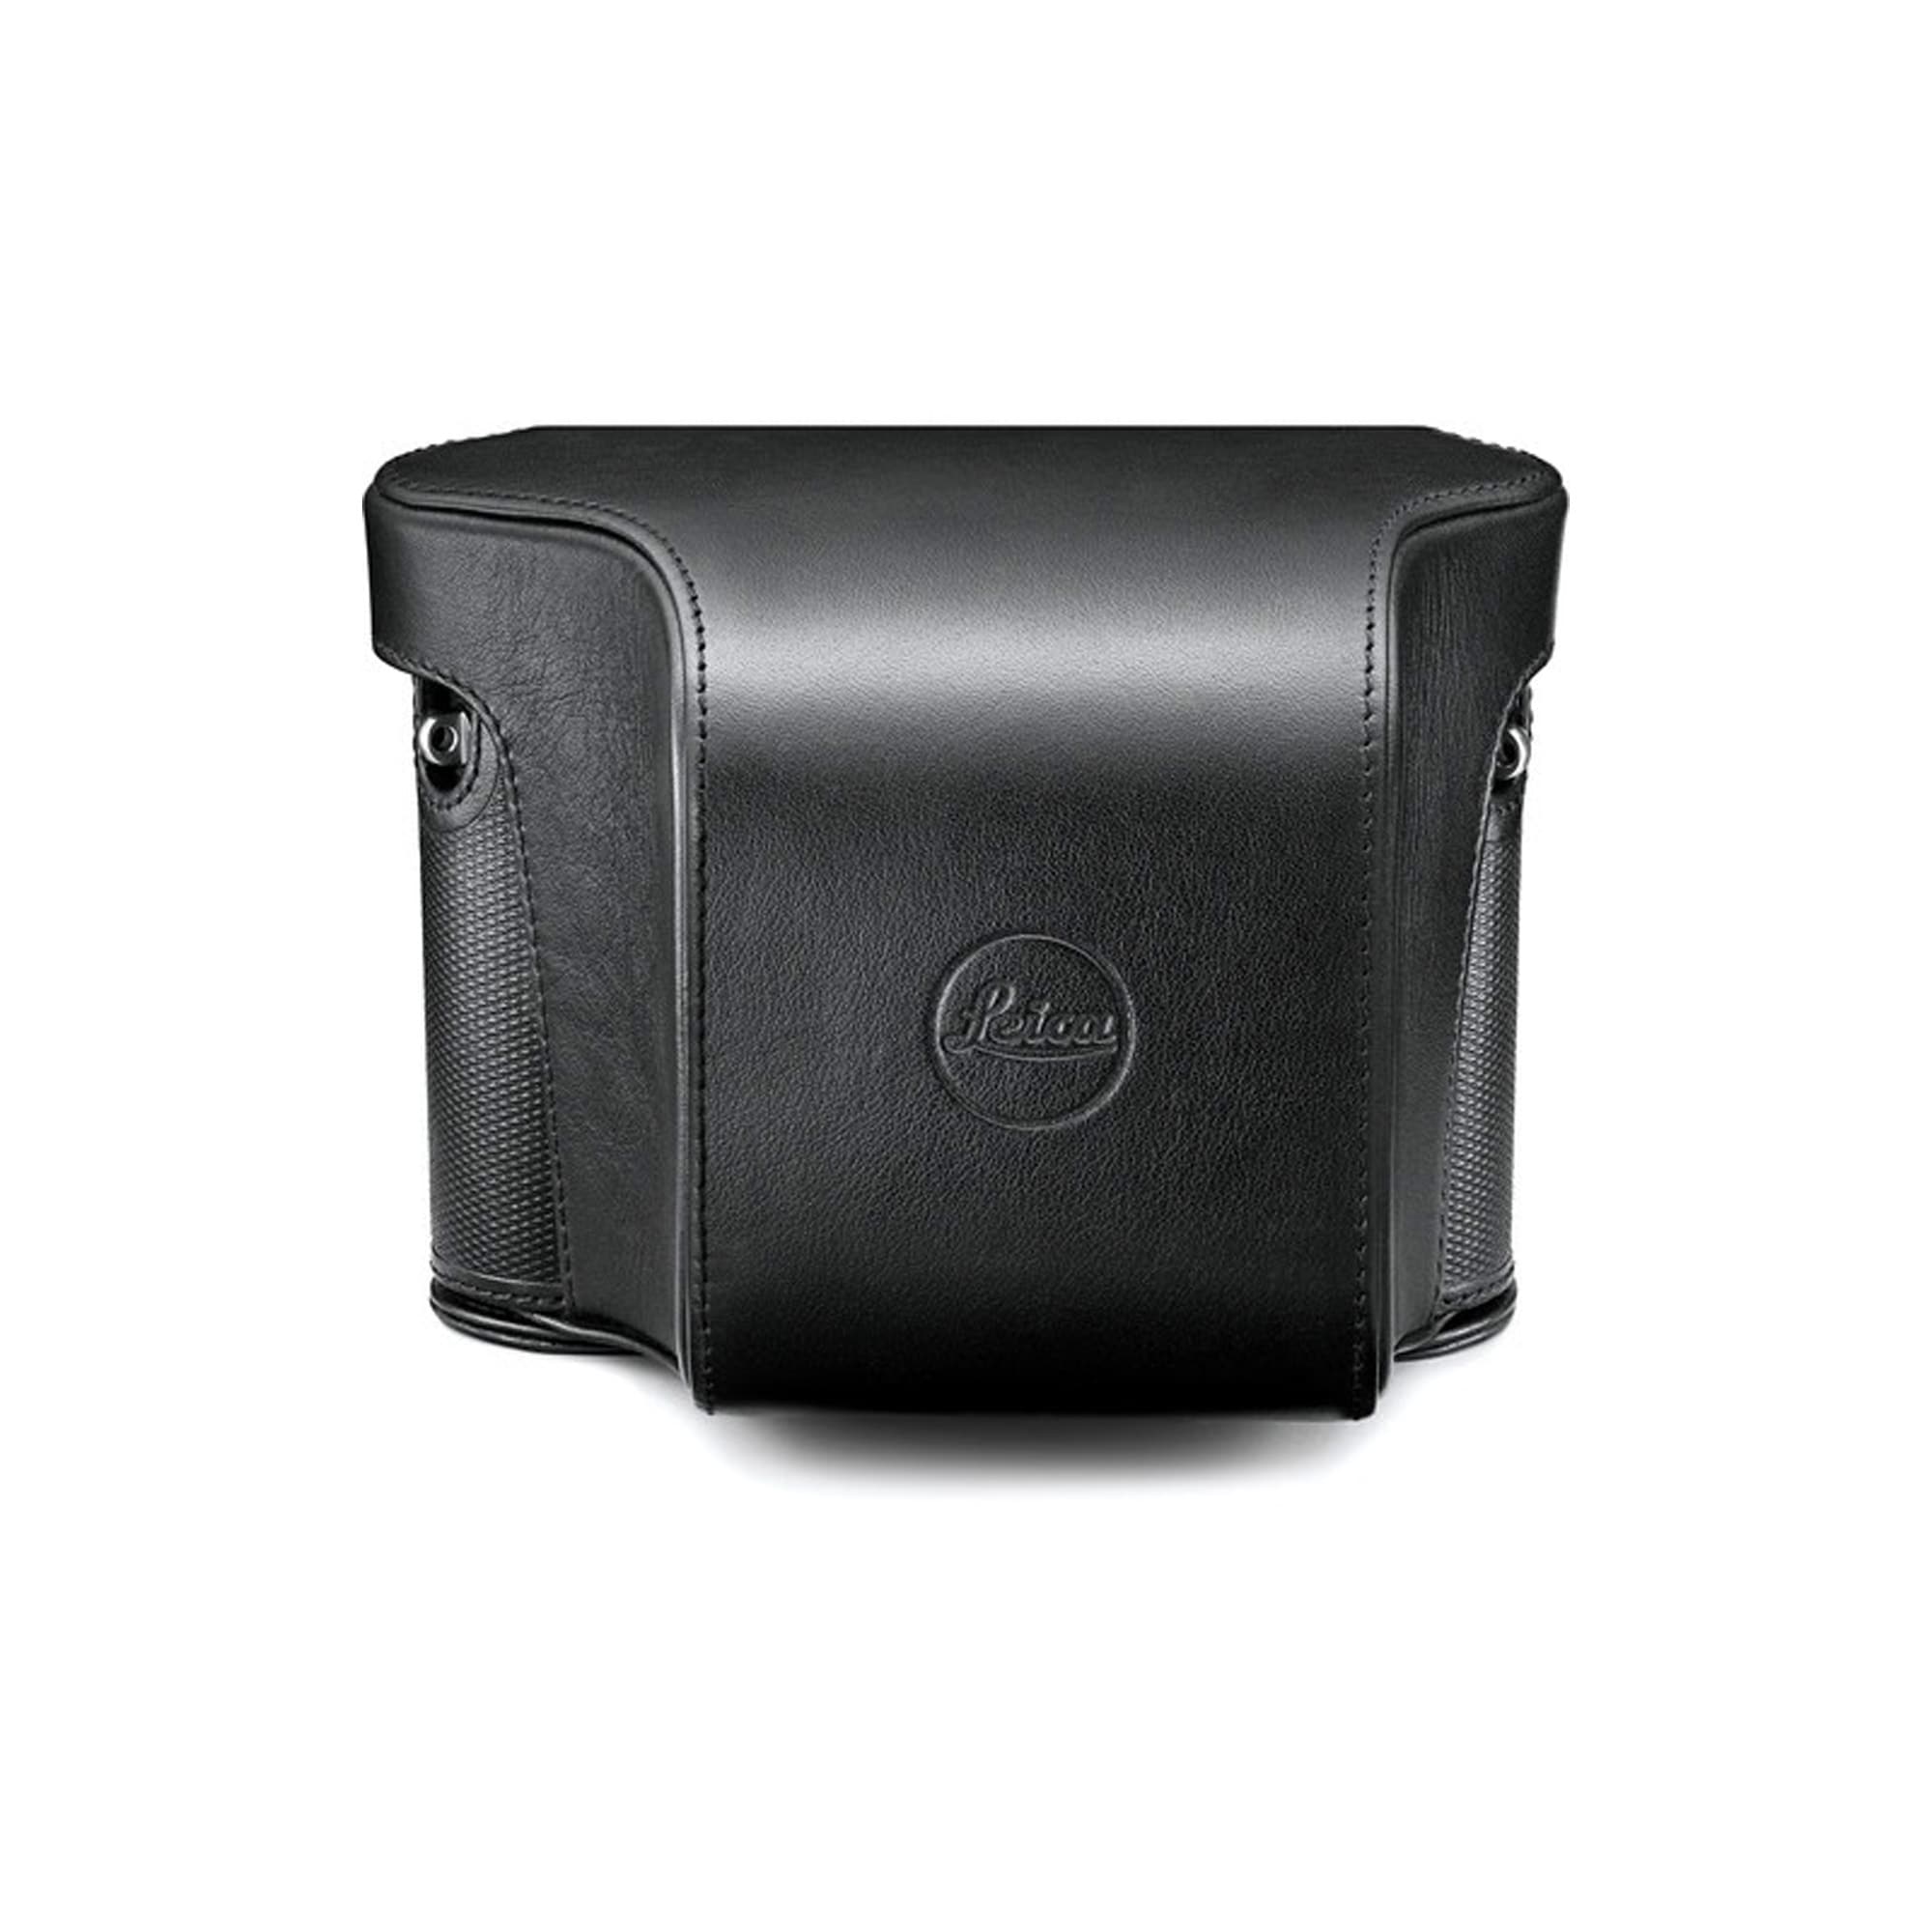 Leica Q Leather Ever Ready Case Svart